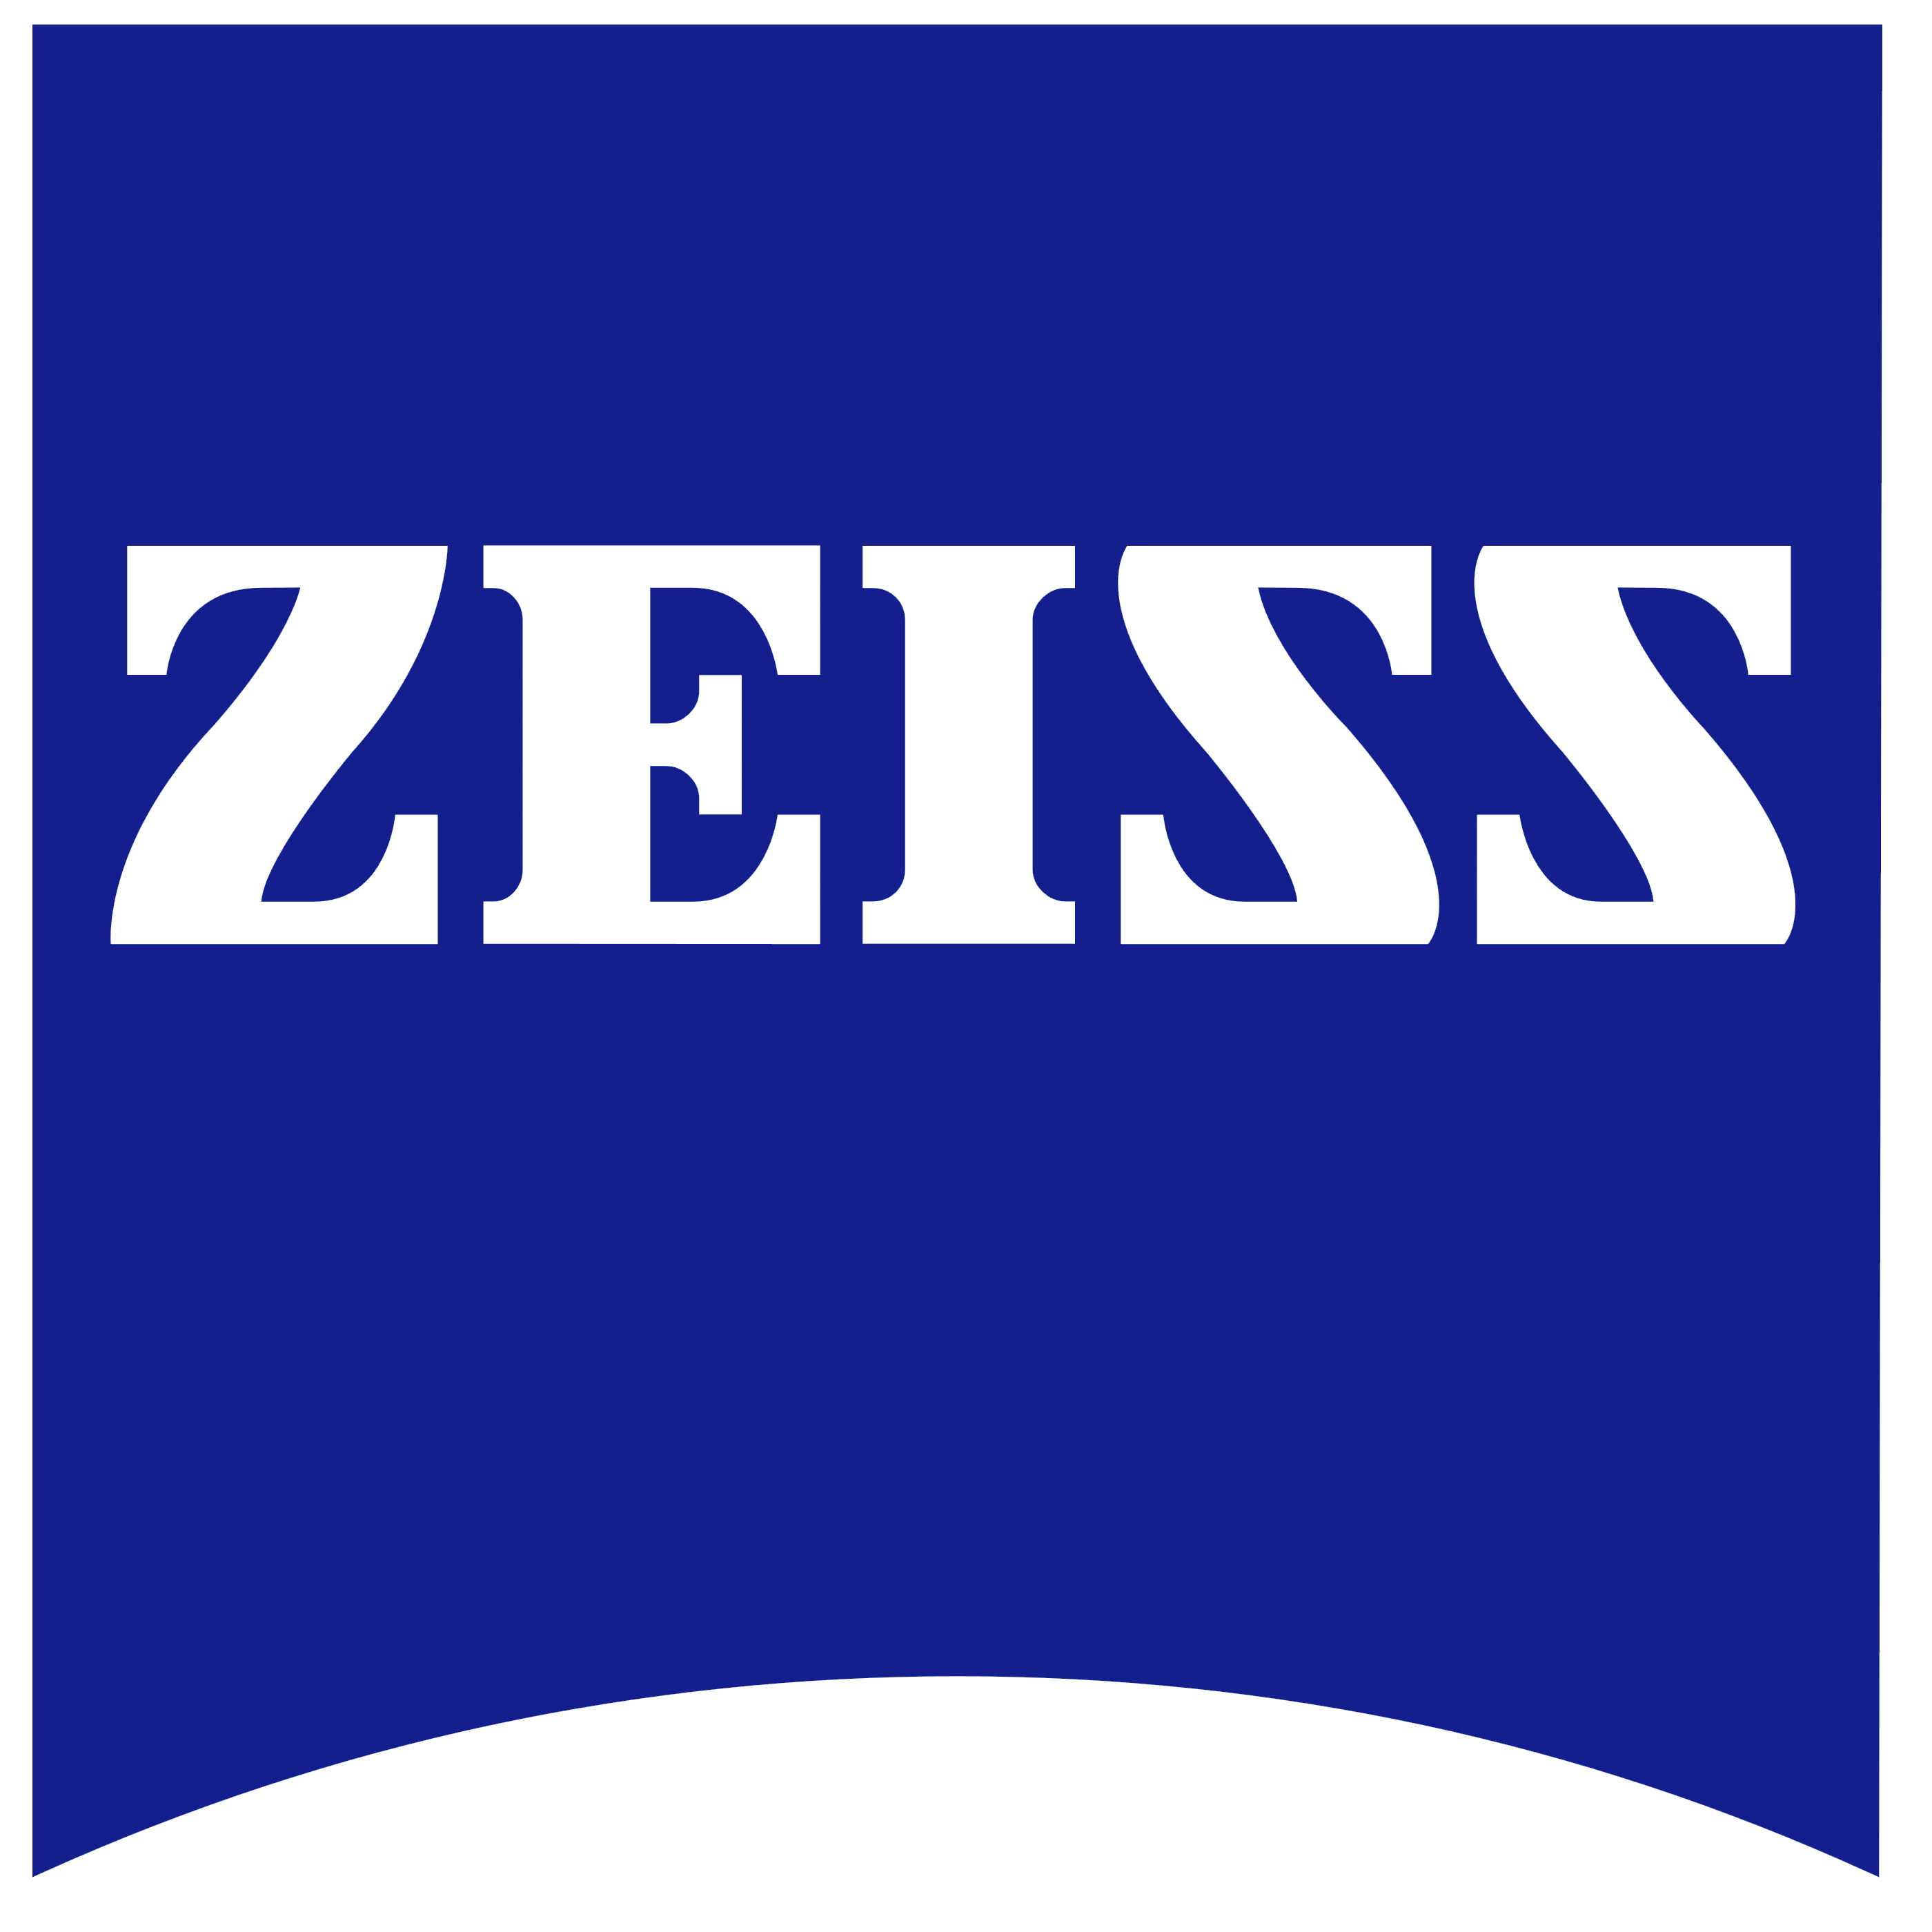 Carl Zeiss logo, logotype